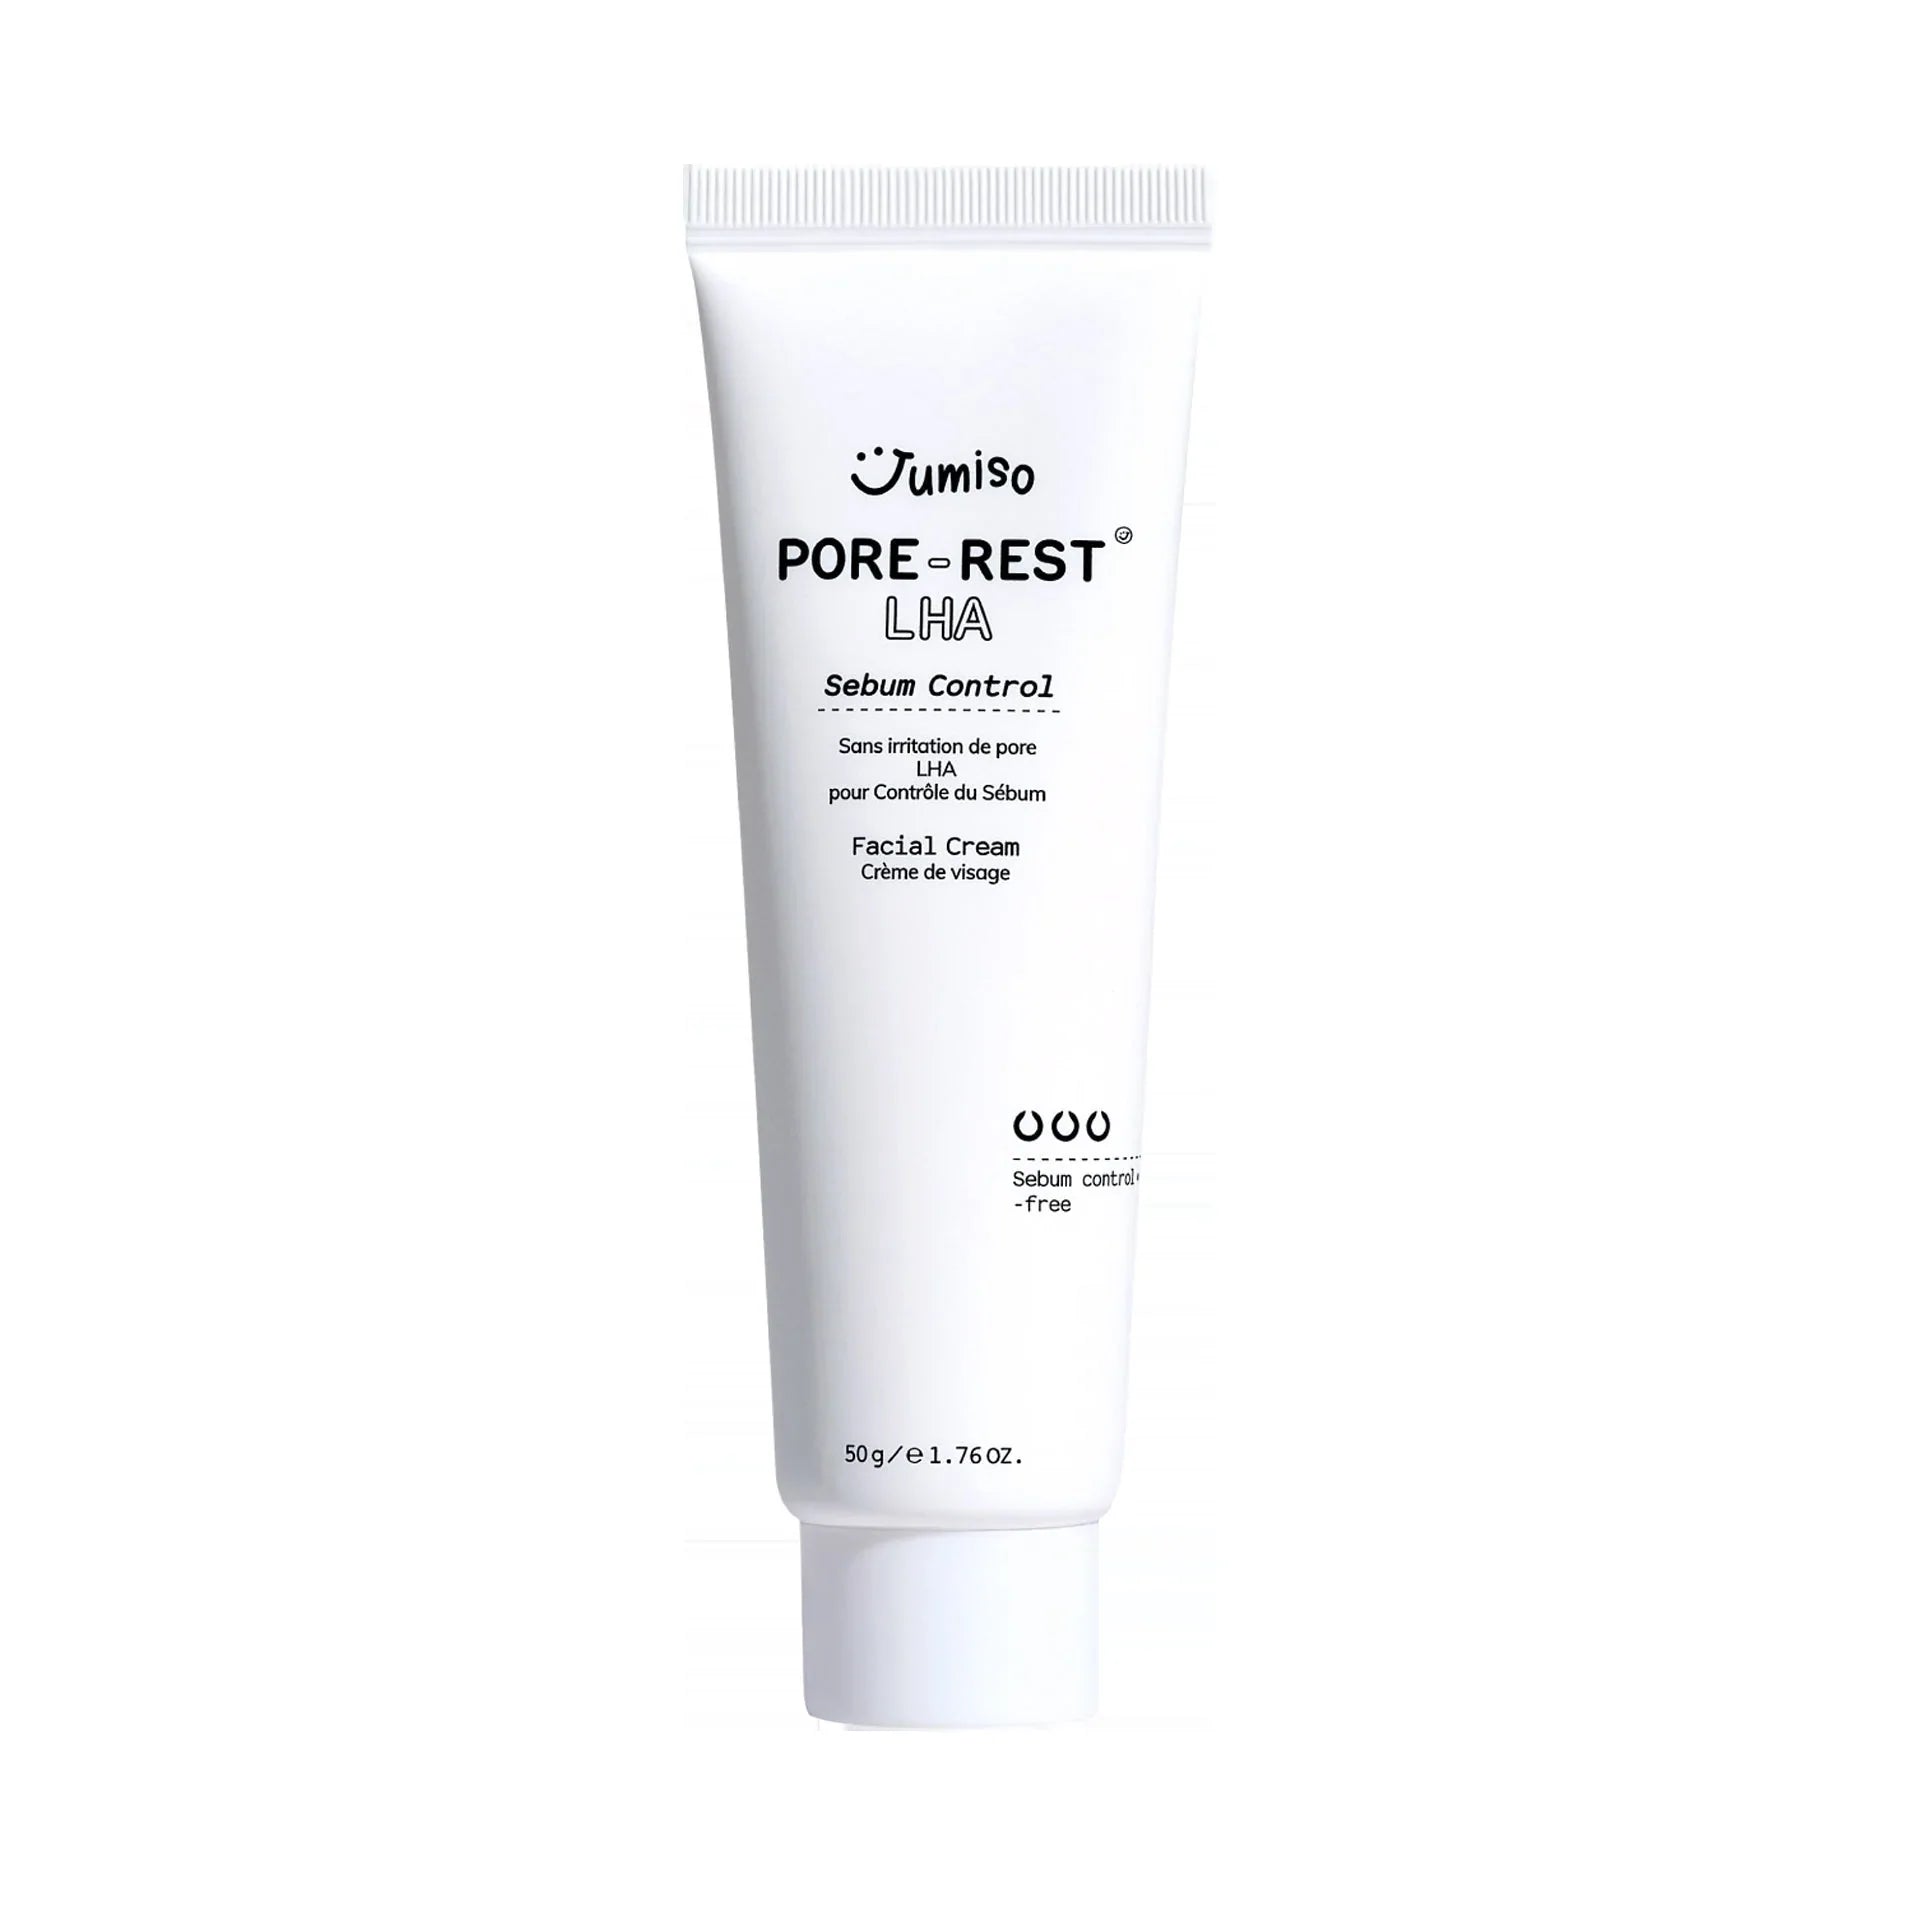 JUMISO - Pore-Rest LHA Sebum Control Facial Cream (Discounted)